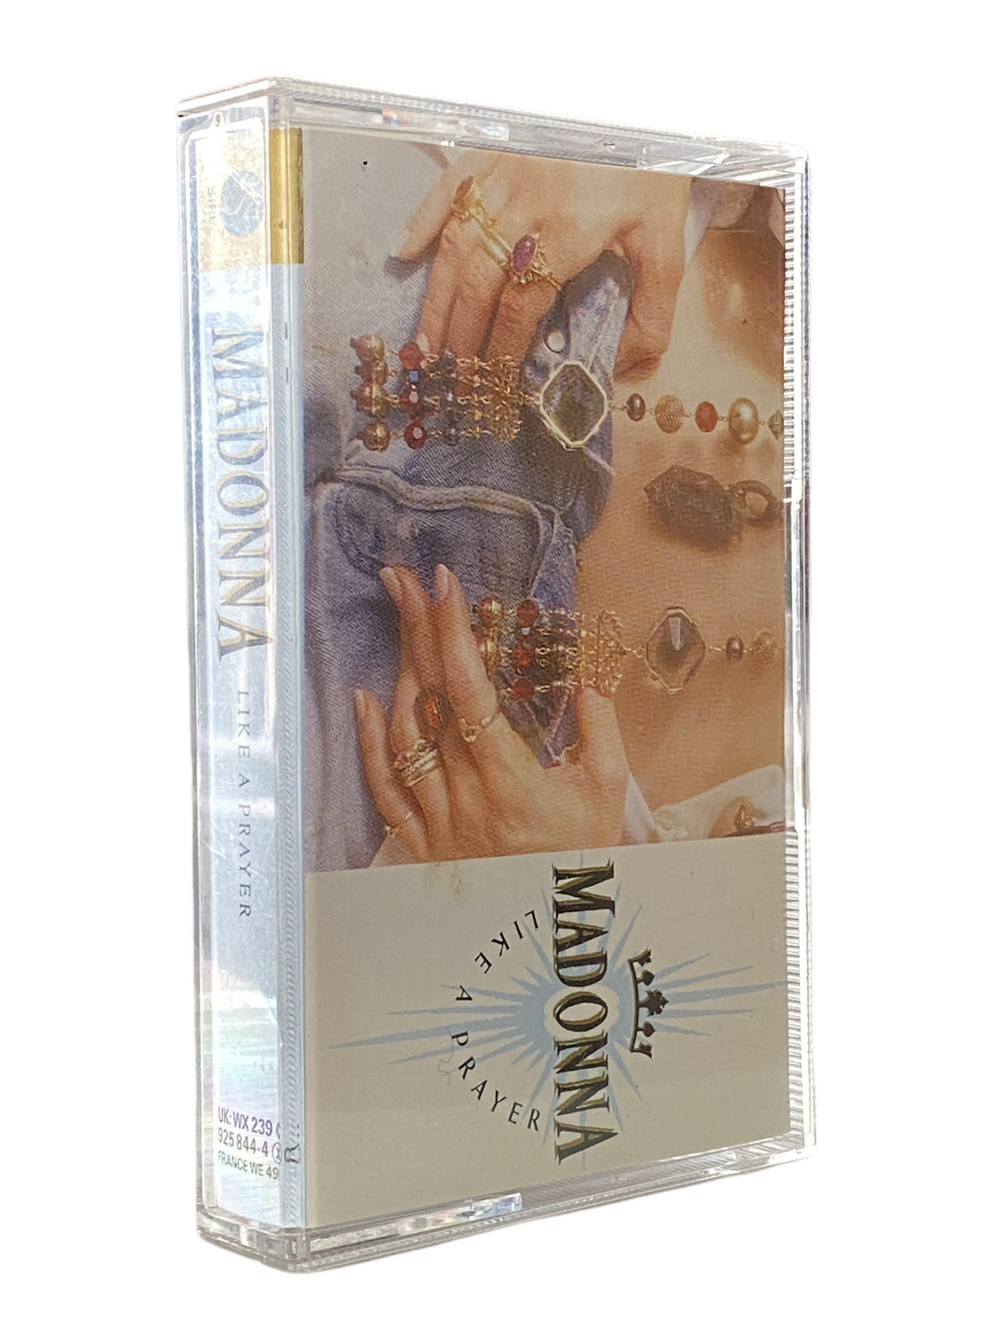 Prince – Madonna Like A Prayer Original Cassette Tape UK EU 1989 Release Prince